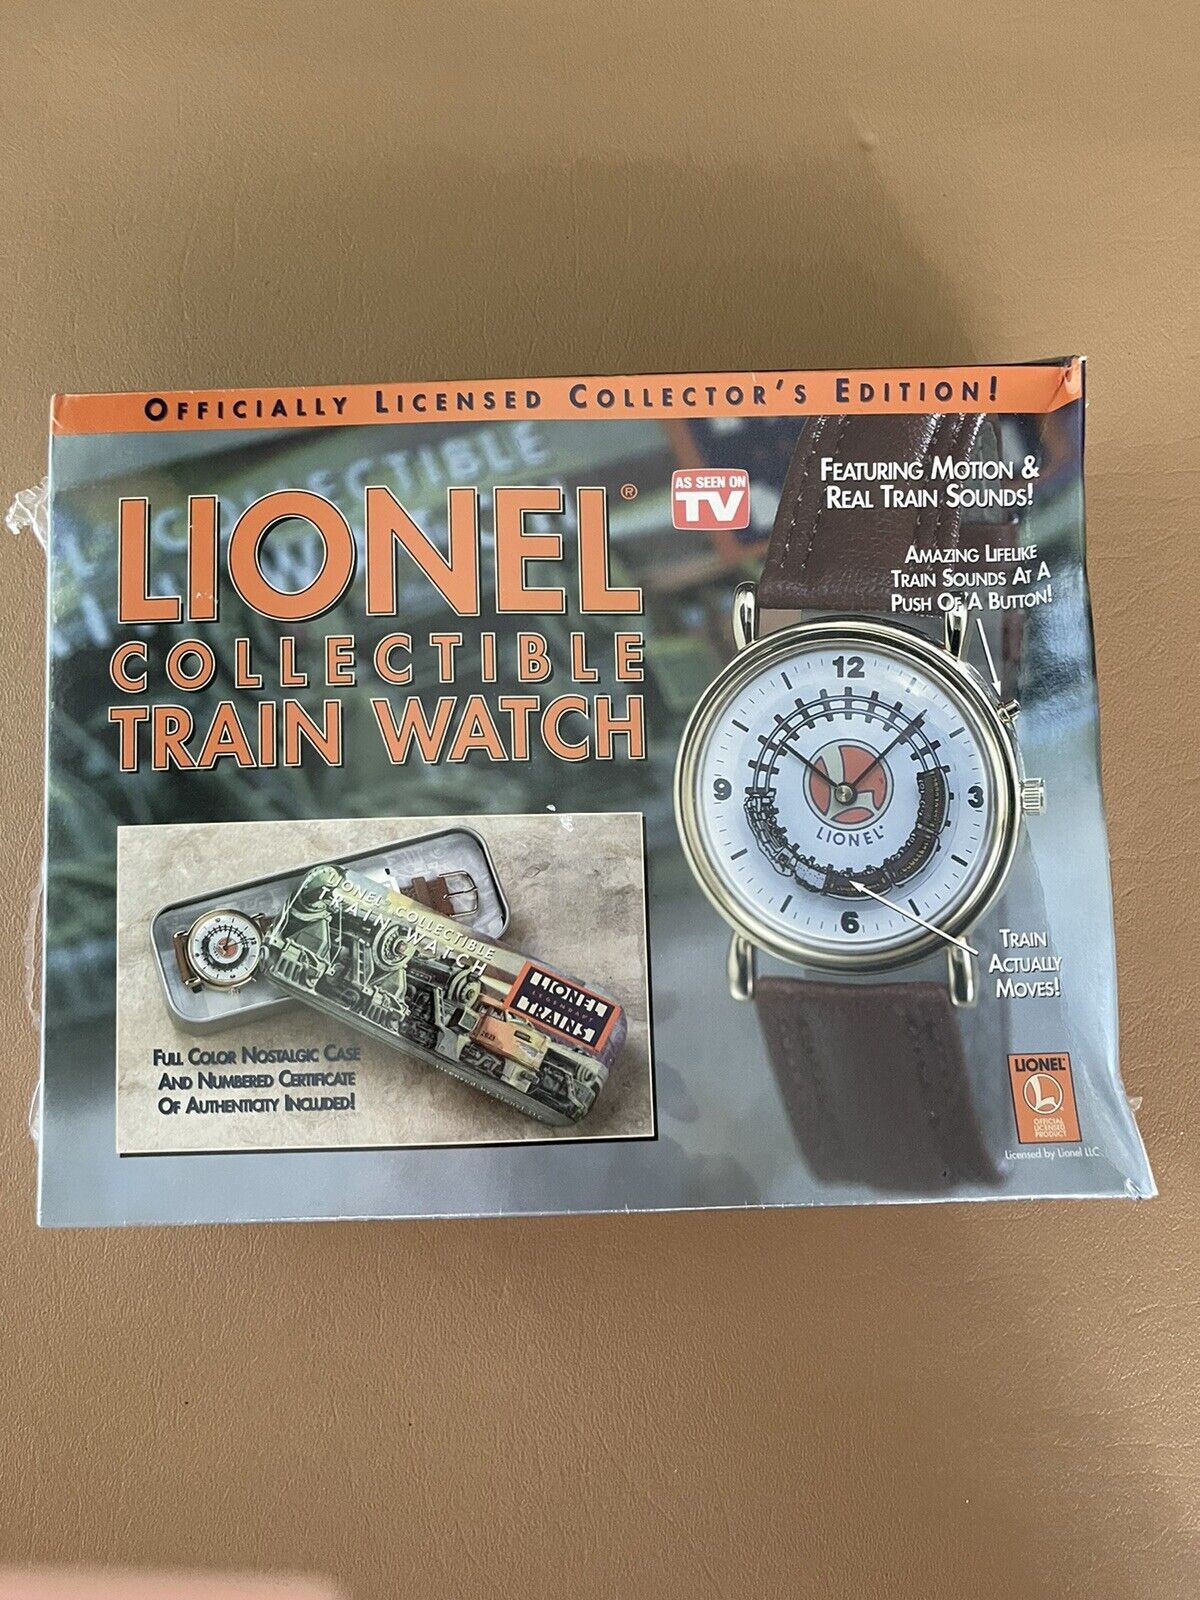 Lionel Collectible Train Watch TeleBrands Collectors Edition